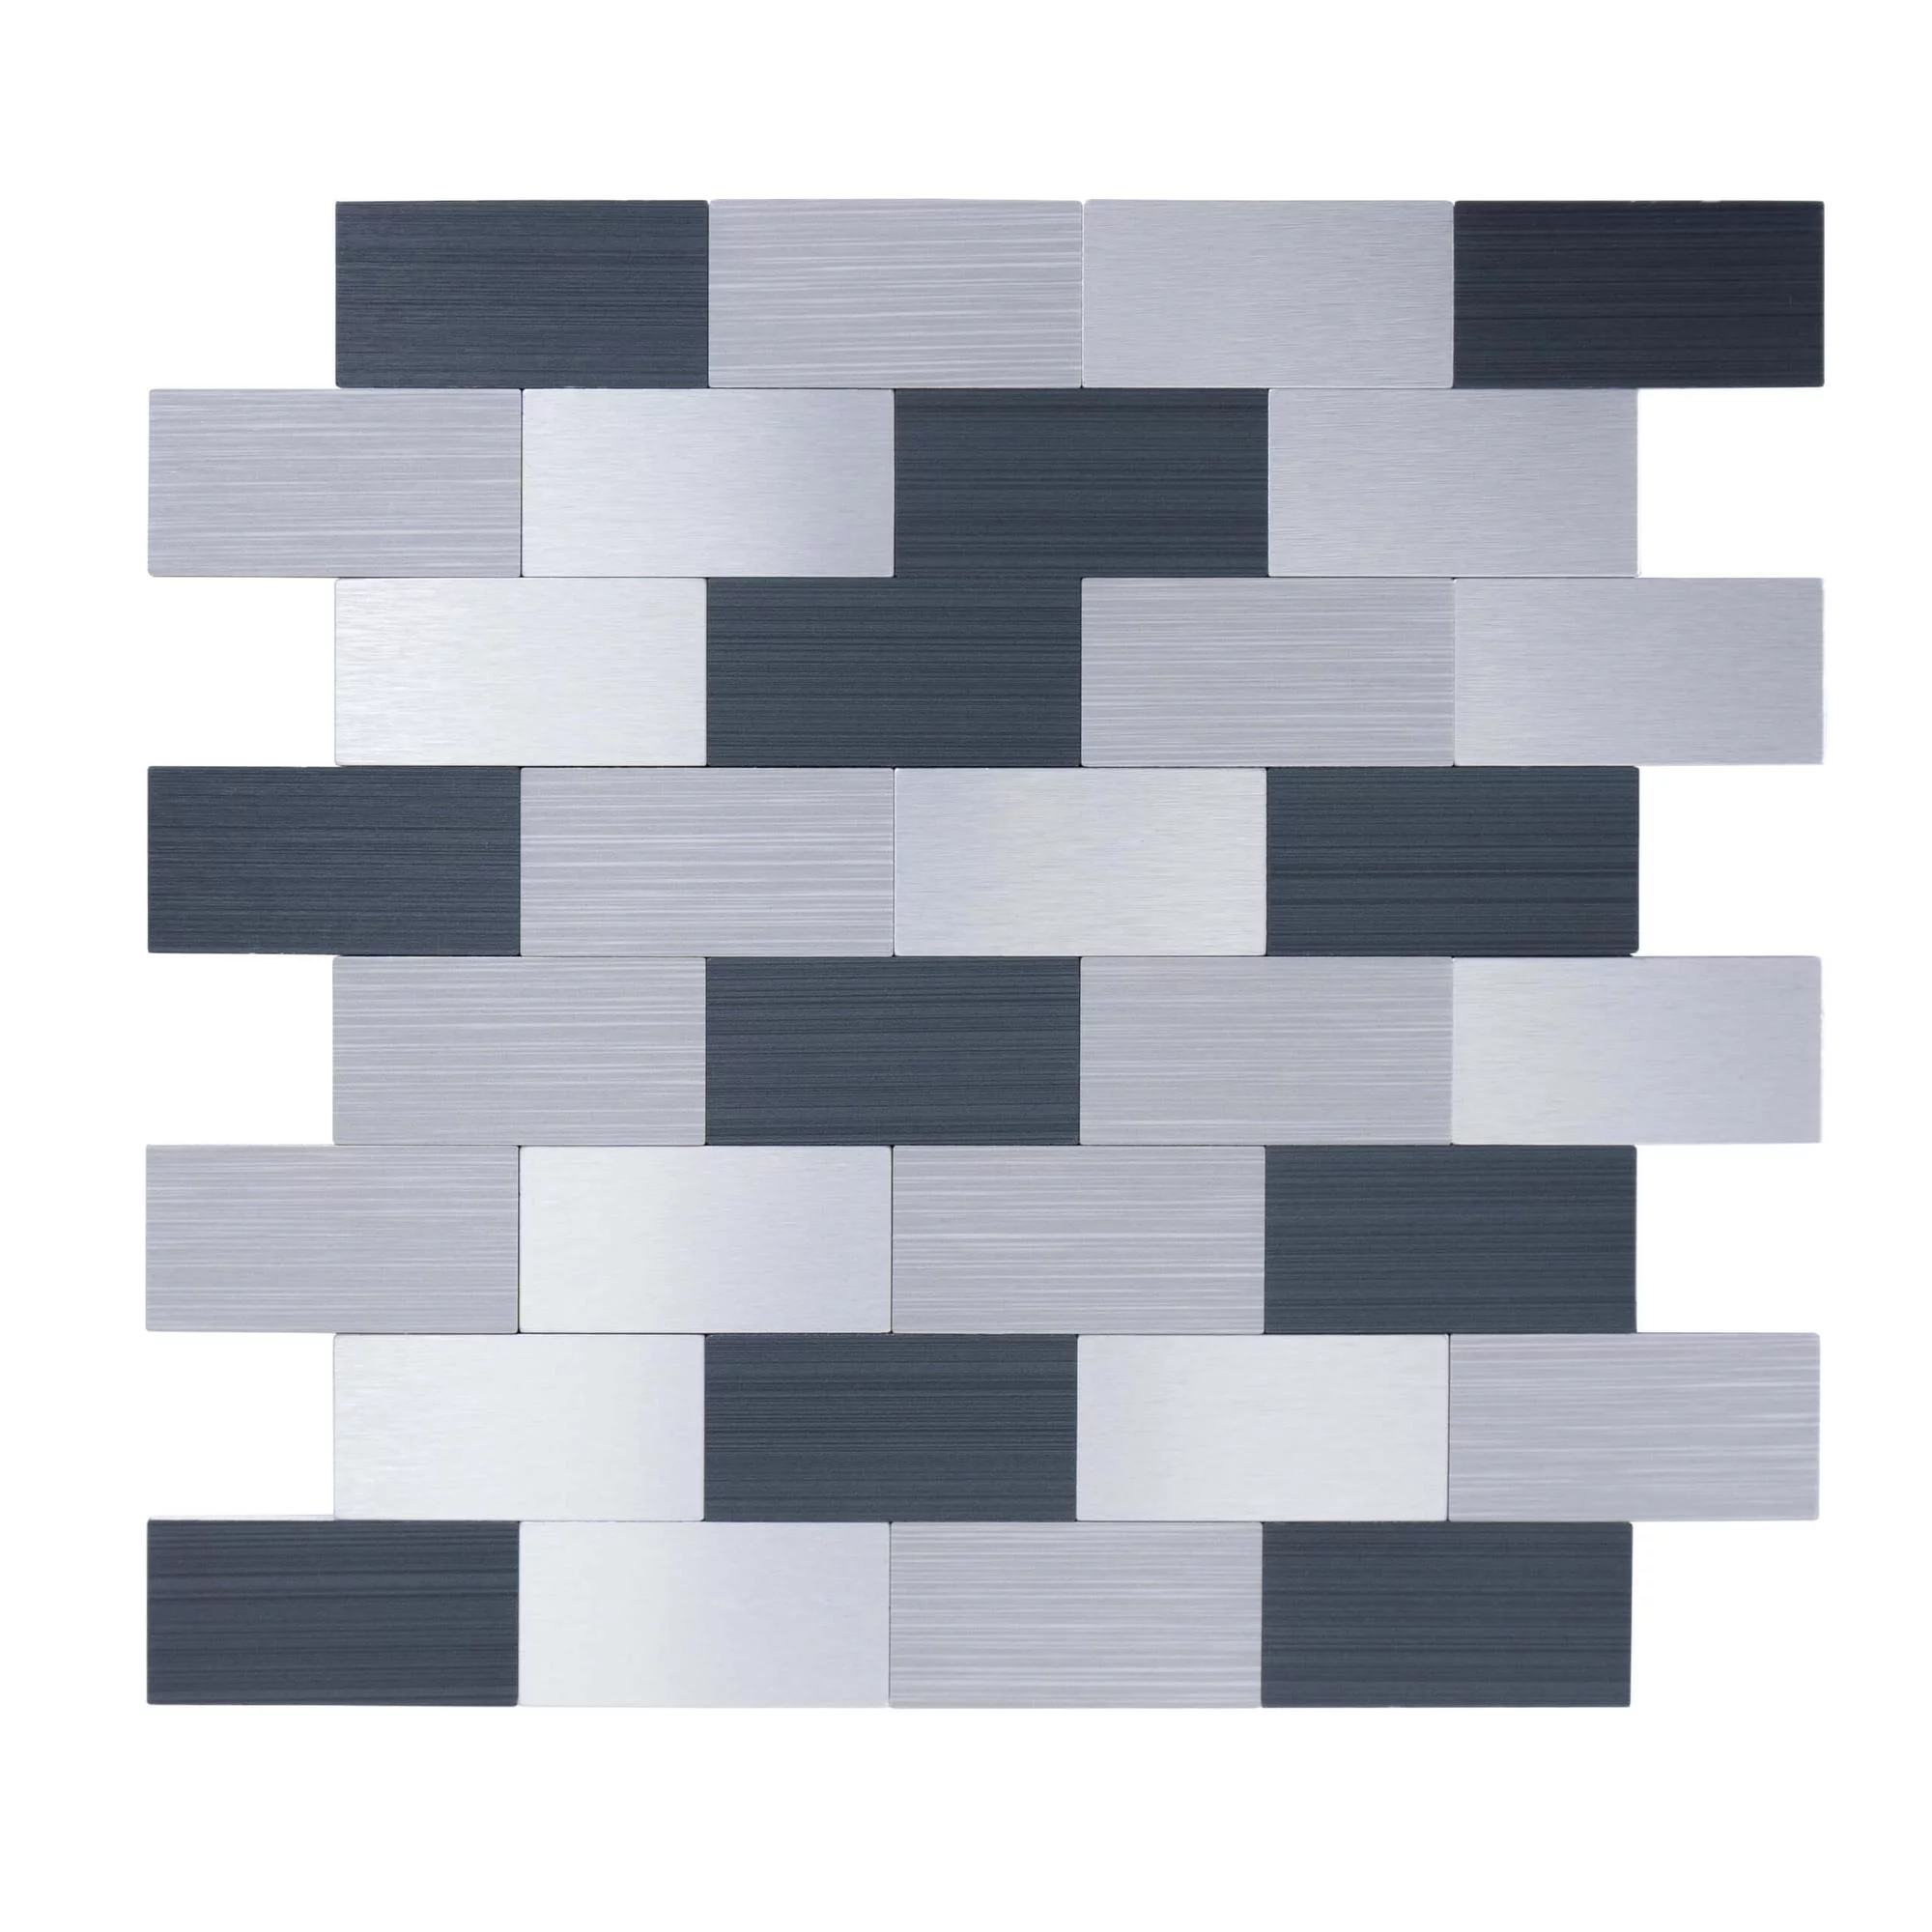 zelfklevende-tegels-rechthoek-1m².-11-pcs-grijs-mix-zilver